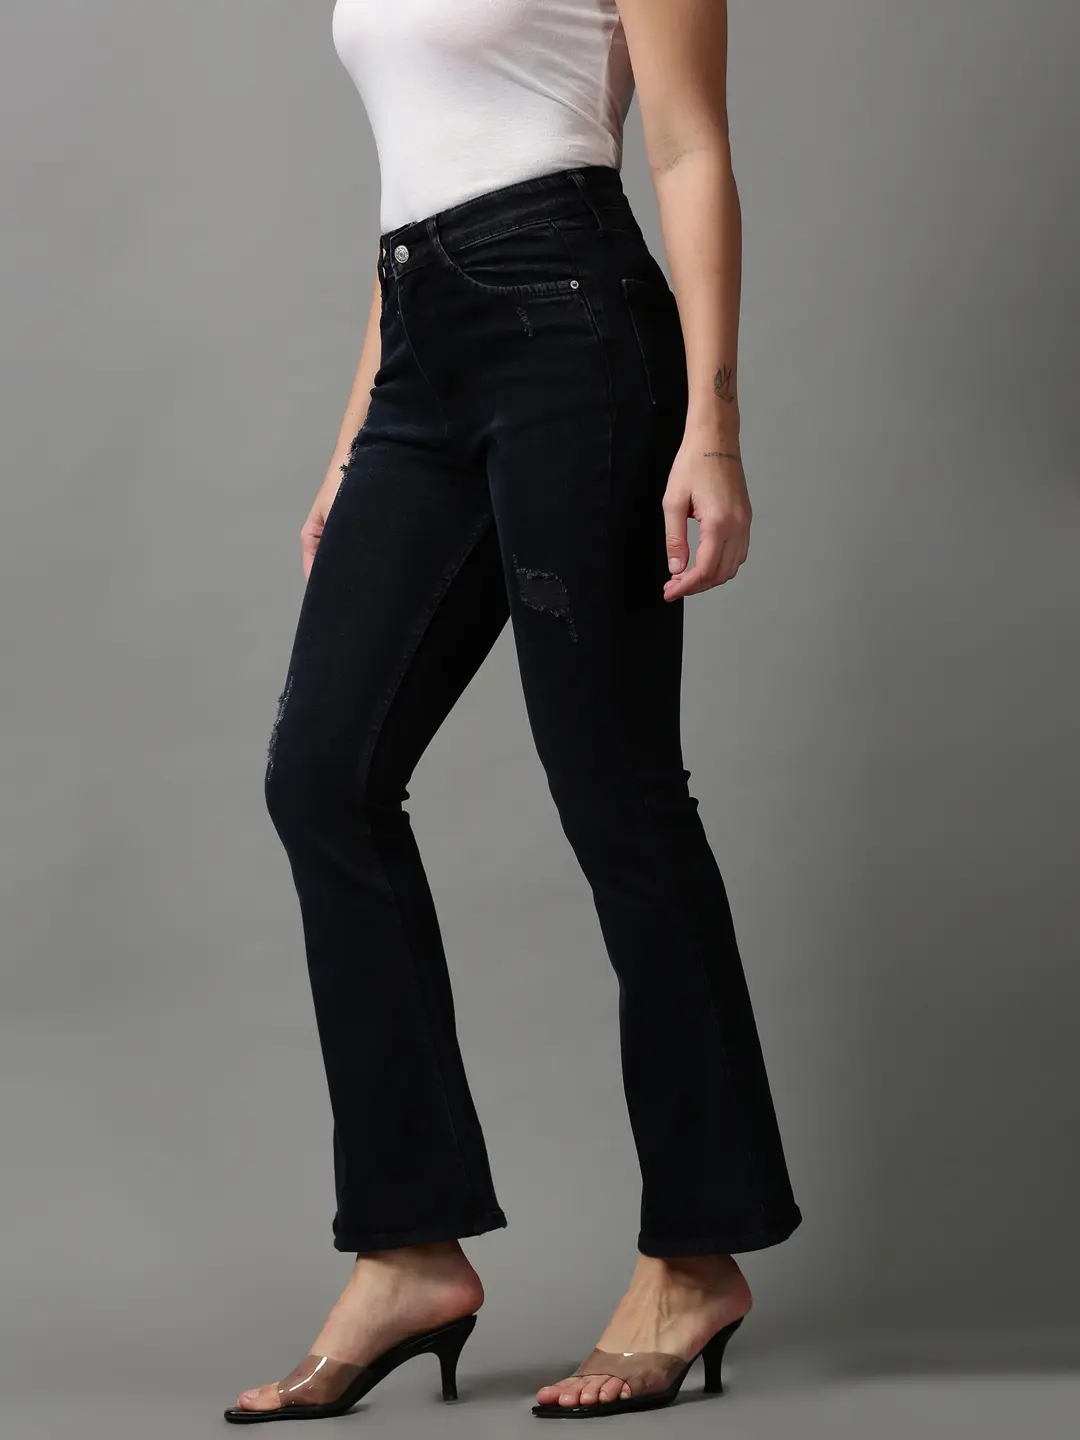 Showoff | SHOWOFF Women's Mildly Distressed Bootcut Black Denim Jeans 2